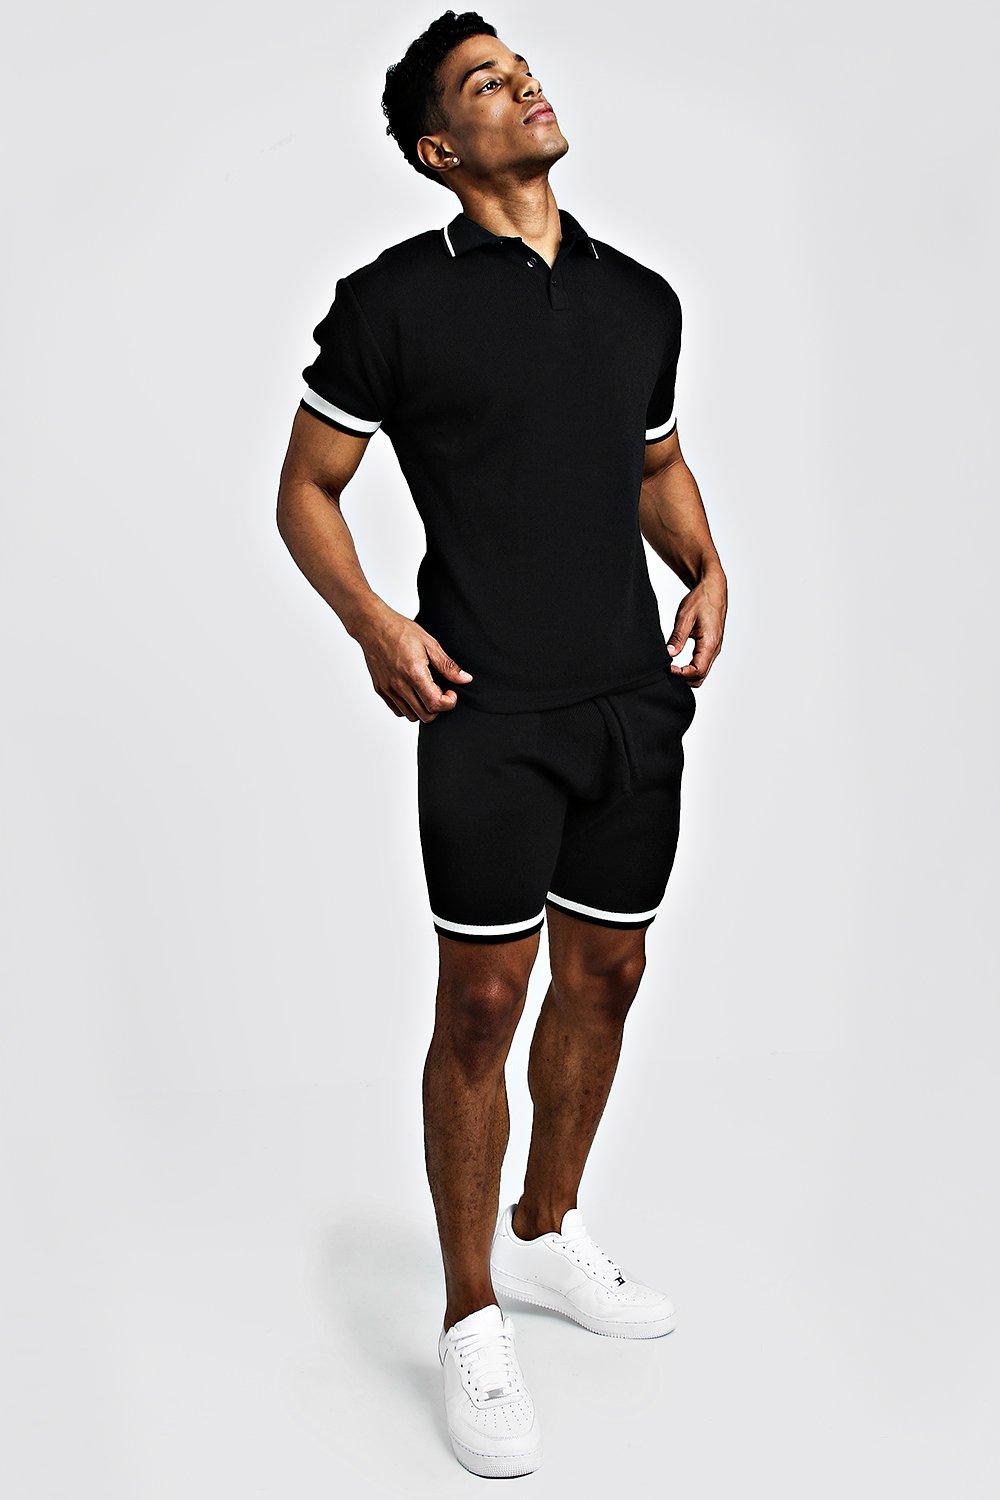 black polo shorts